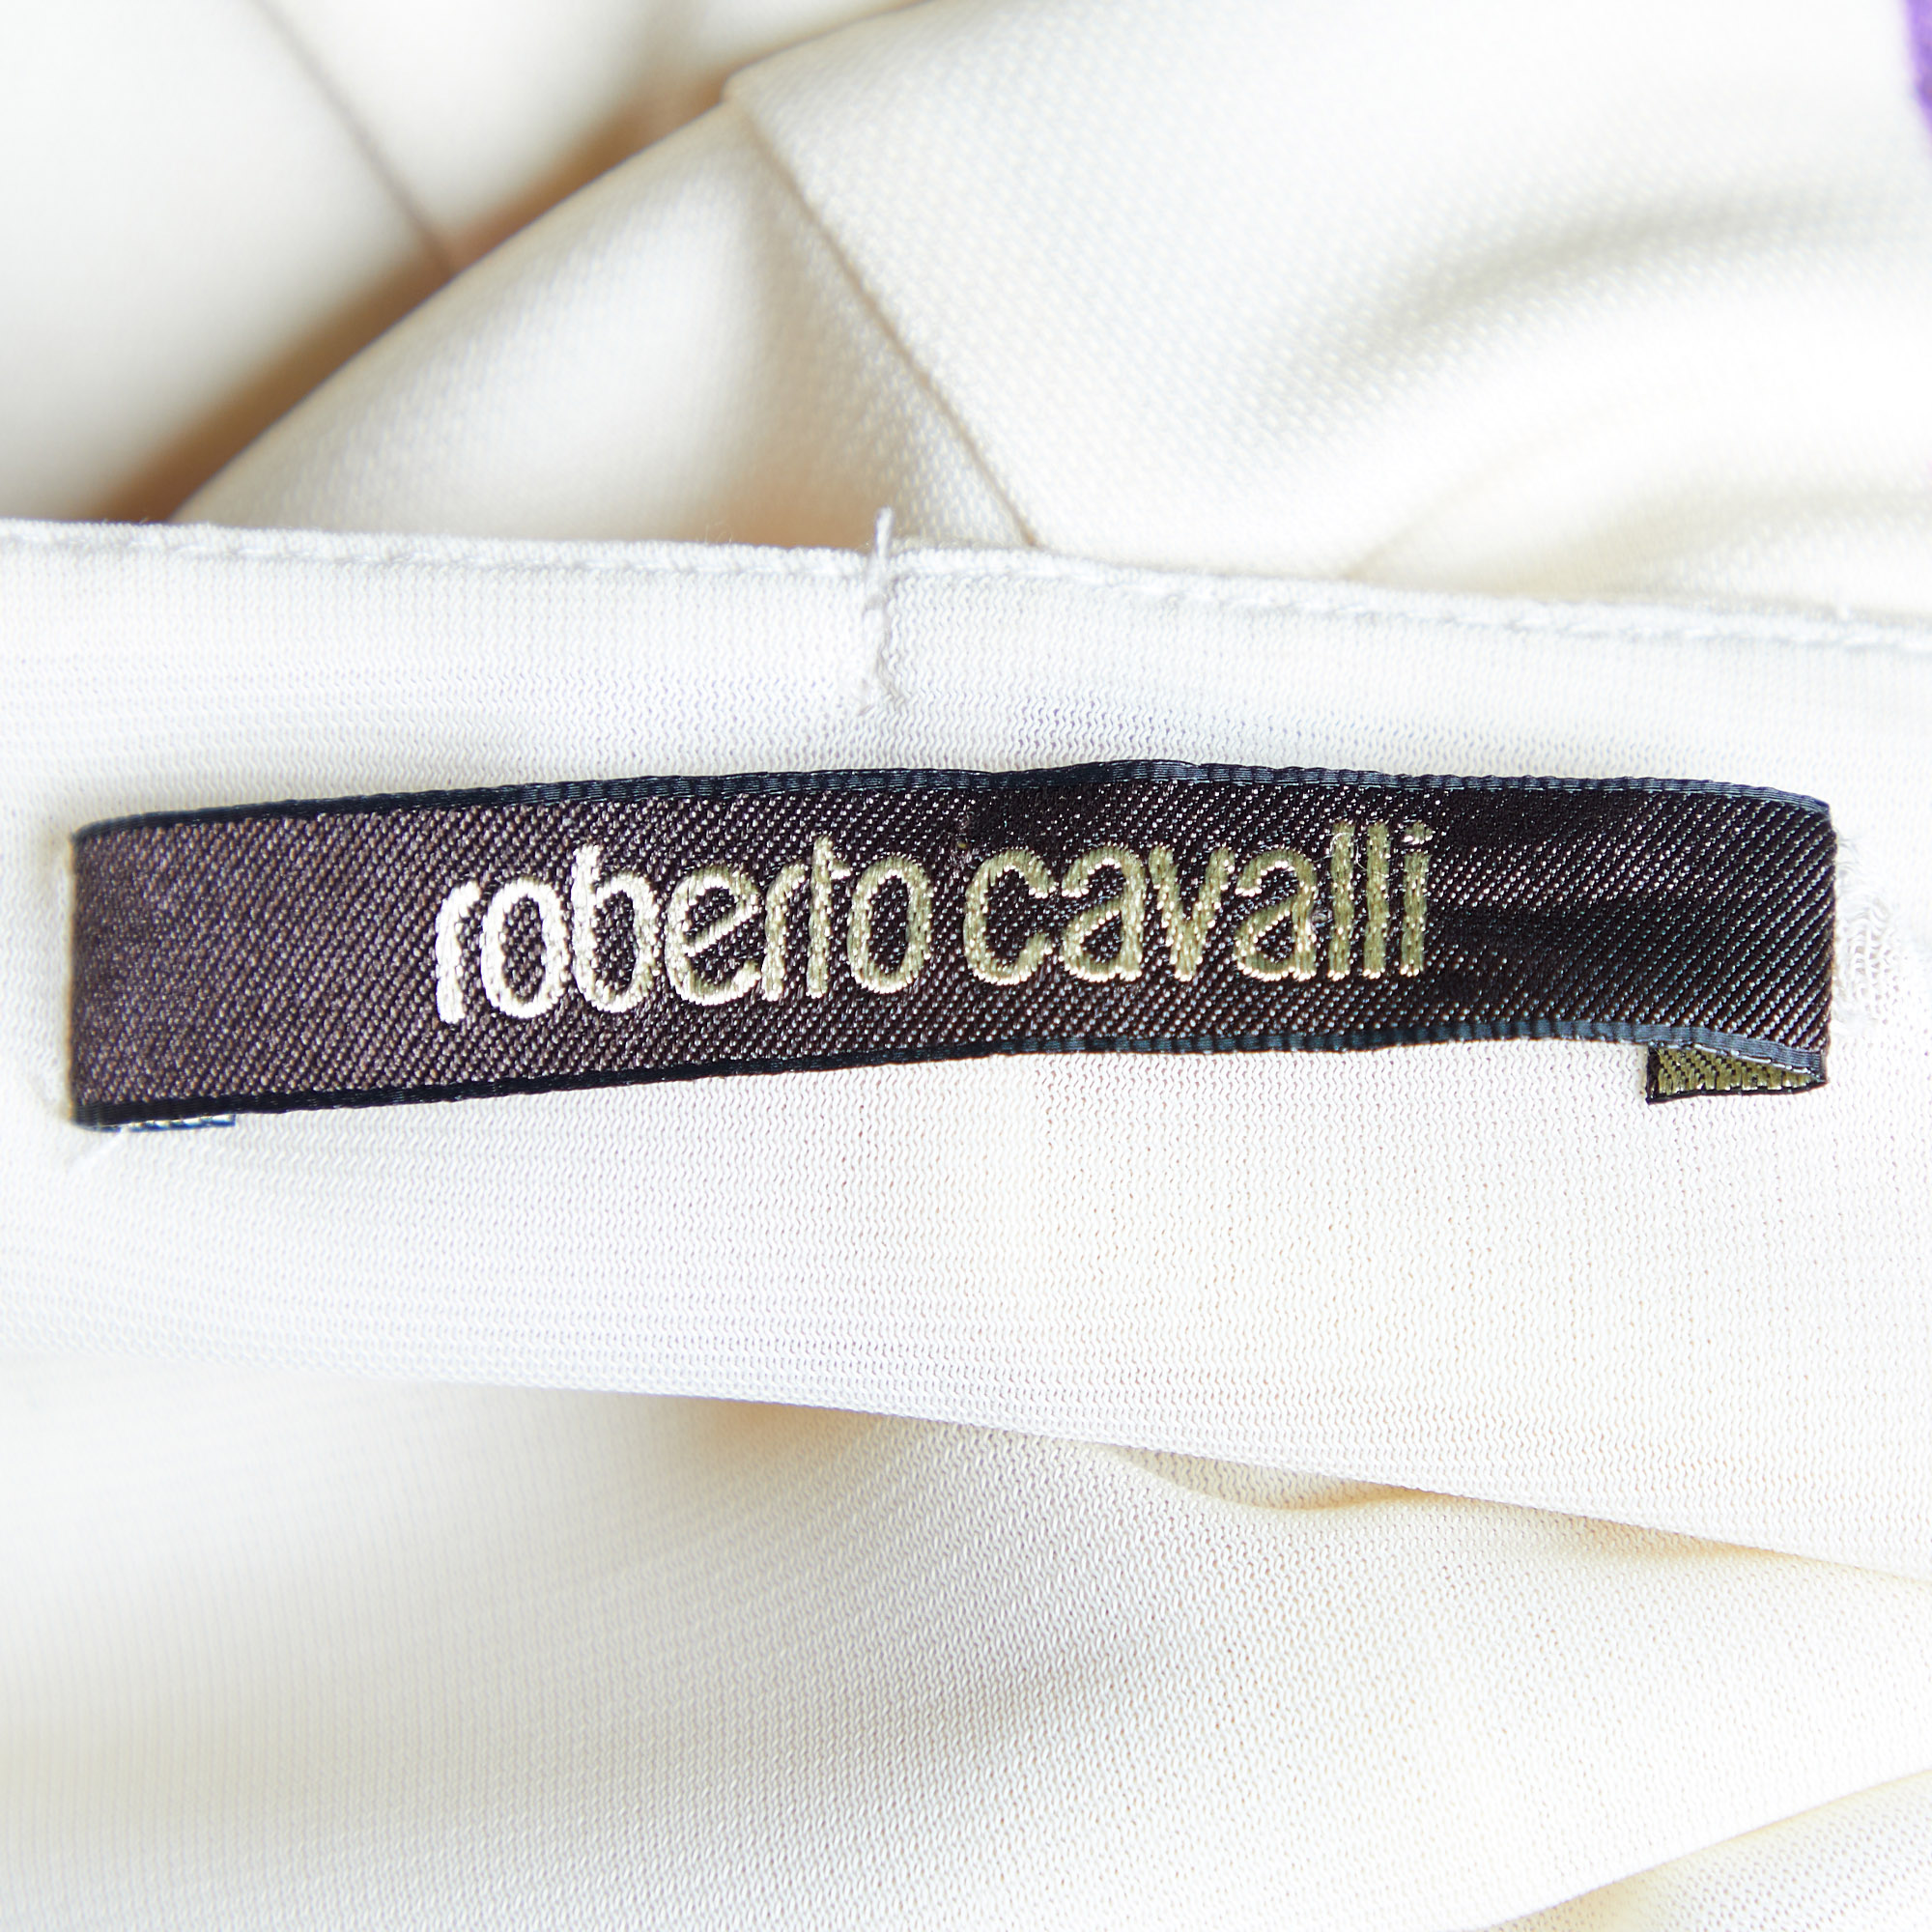 Roberto Cavalli Cream Floral Print Jersey Serpent Detail Sheath Dress S